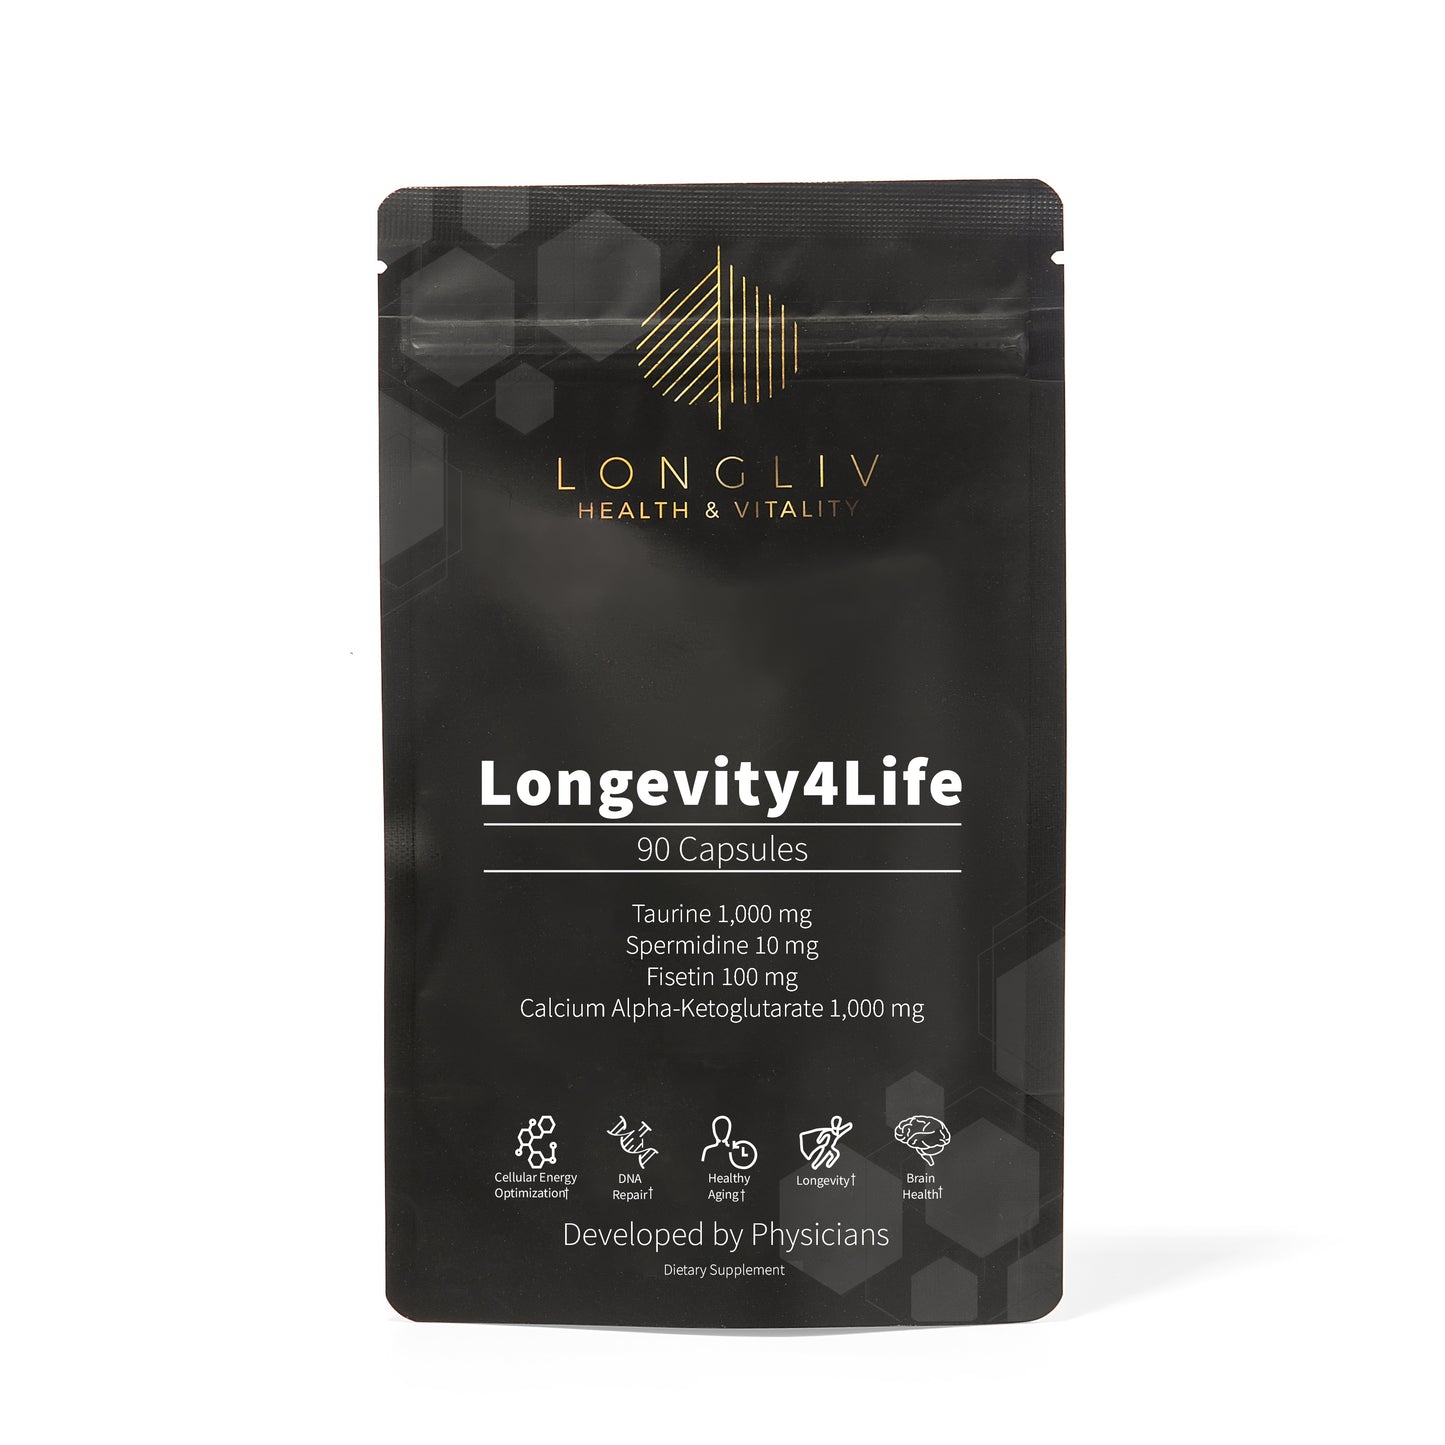 NOW available! Longevity4Life - Ultimate Cellular Health Supplement - Fisetin, Taurine, Calcium Alpha-Ketoglutarate, Spermidine